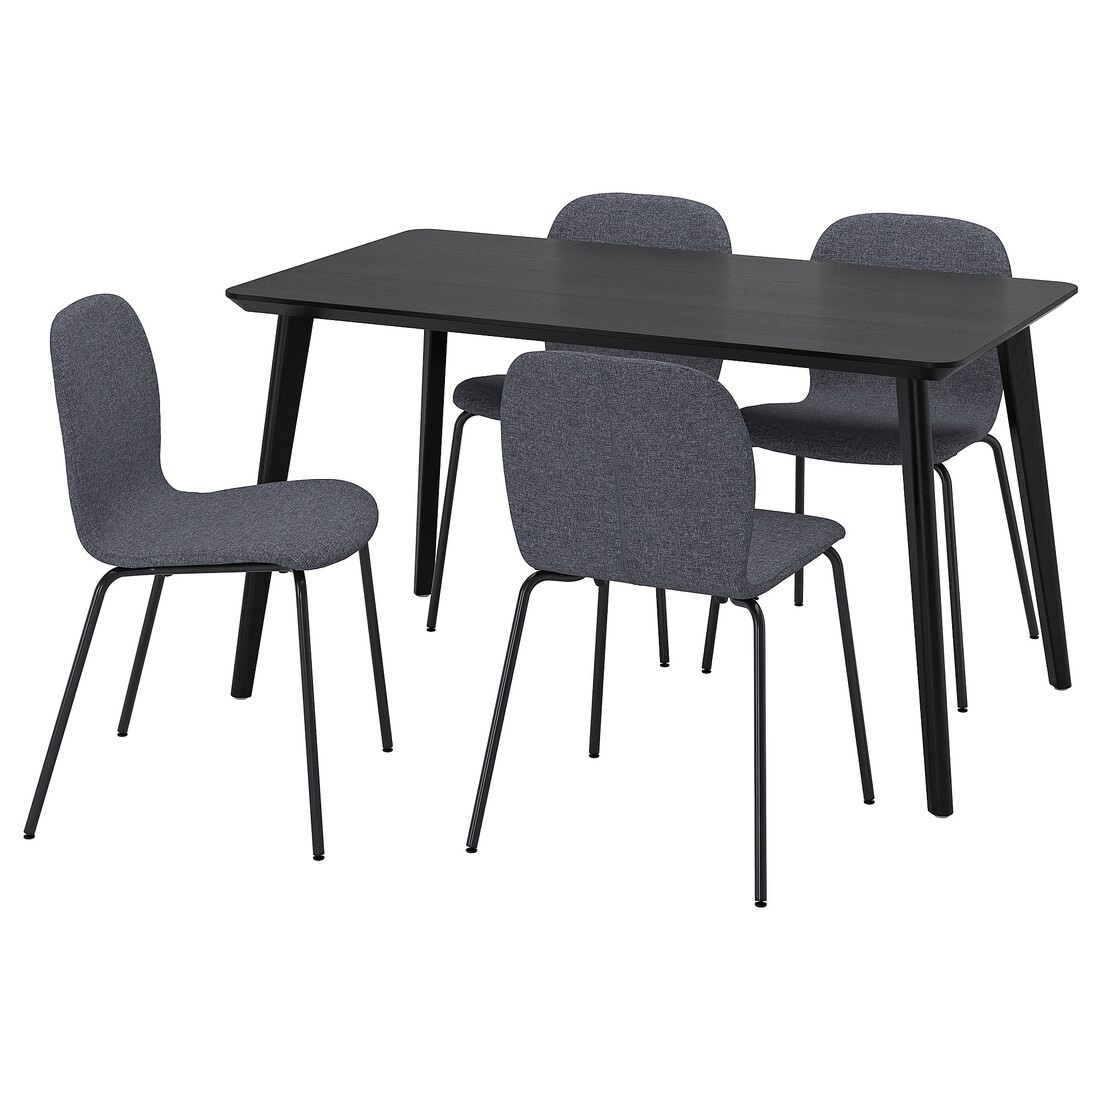 IKEA LISABO / KARLPETTER ЛИСАБО / КАРЛПЕТТЕР Стол и 4 стула, черный / Gunnared серый черный, 140x78 см 89516769 895.167.69